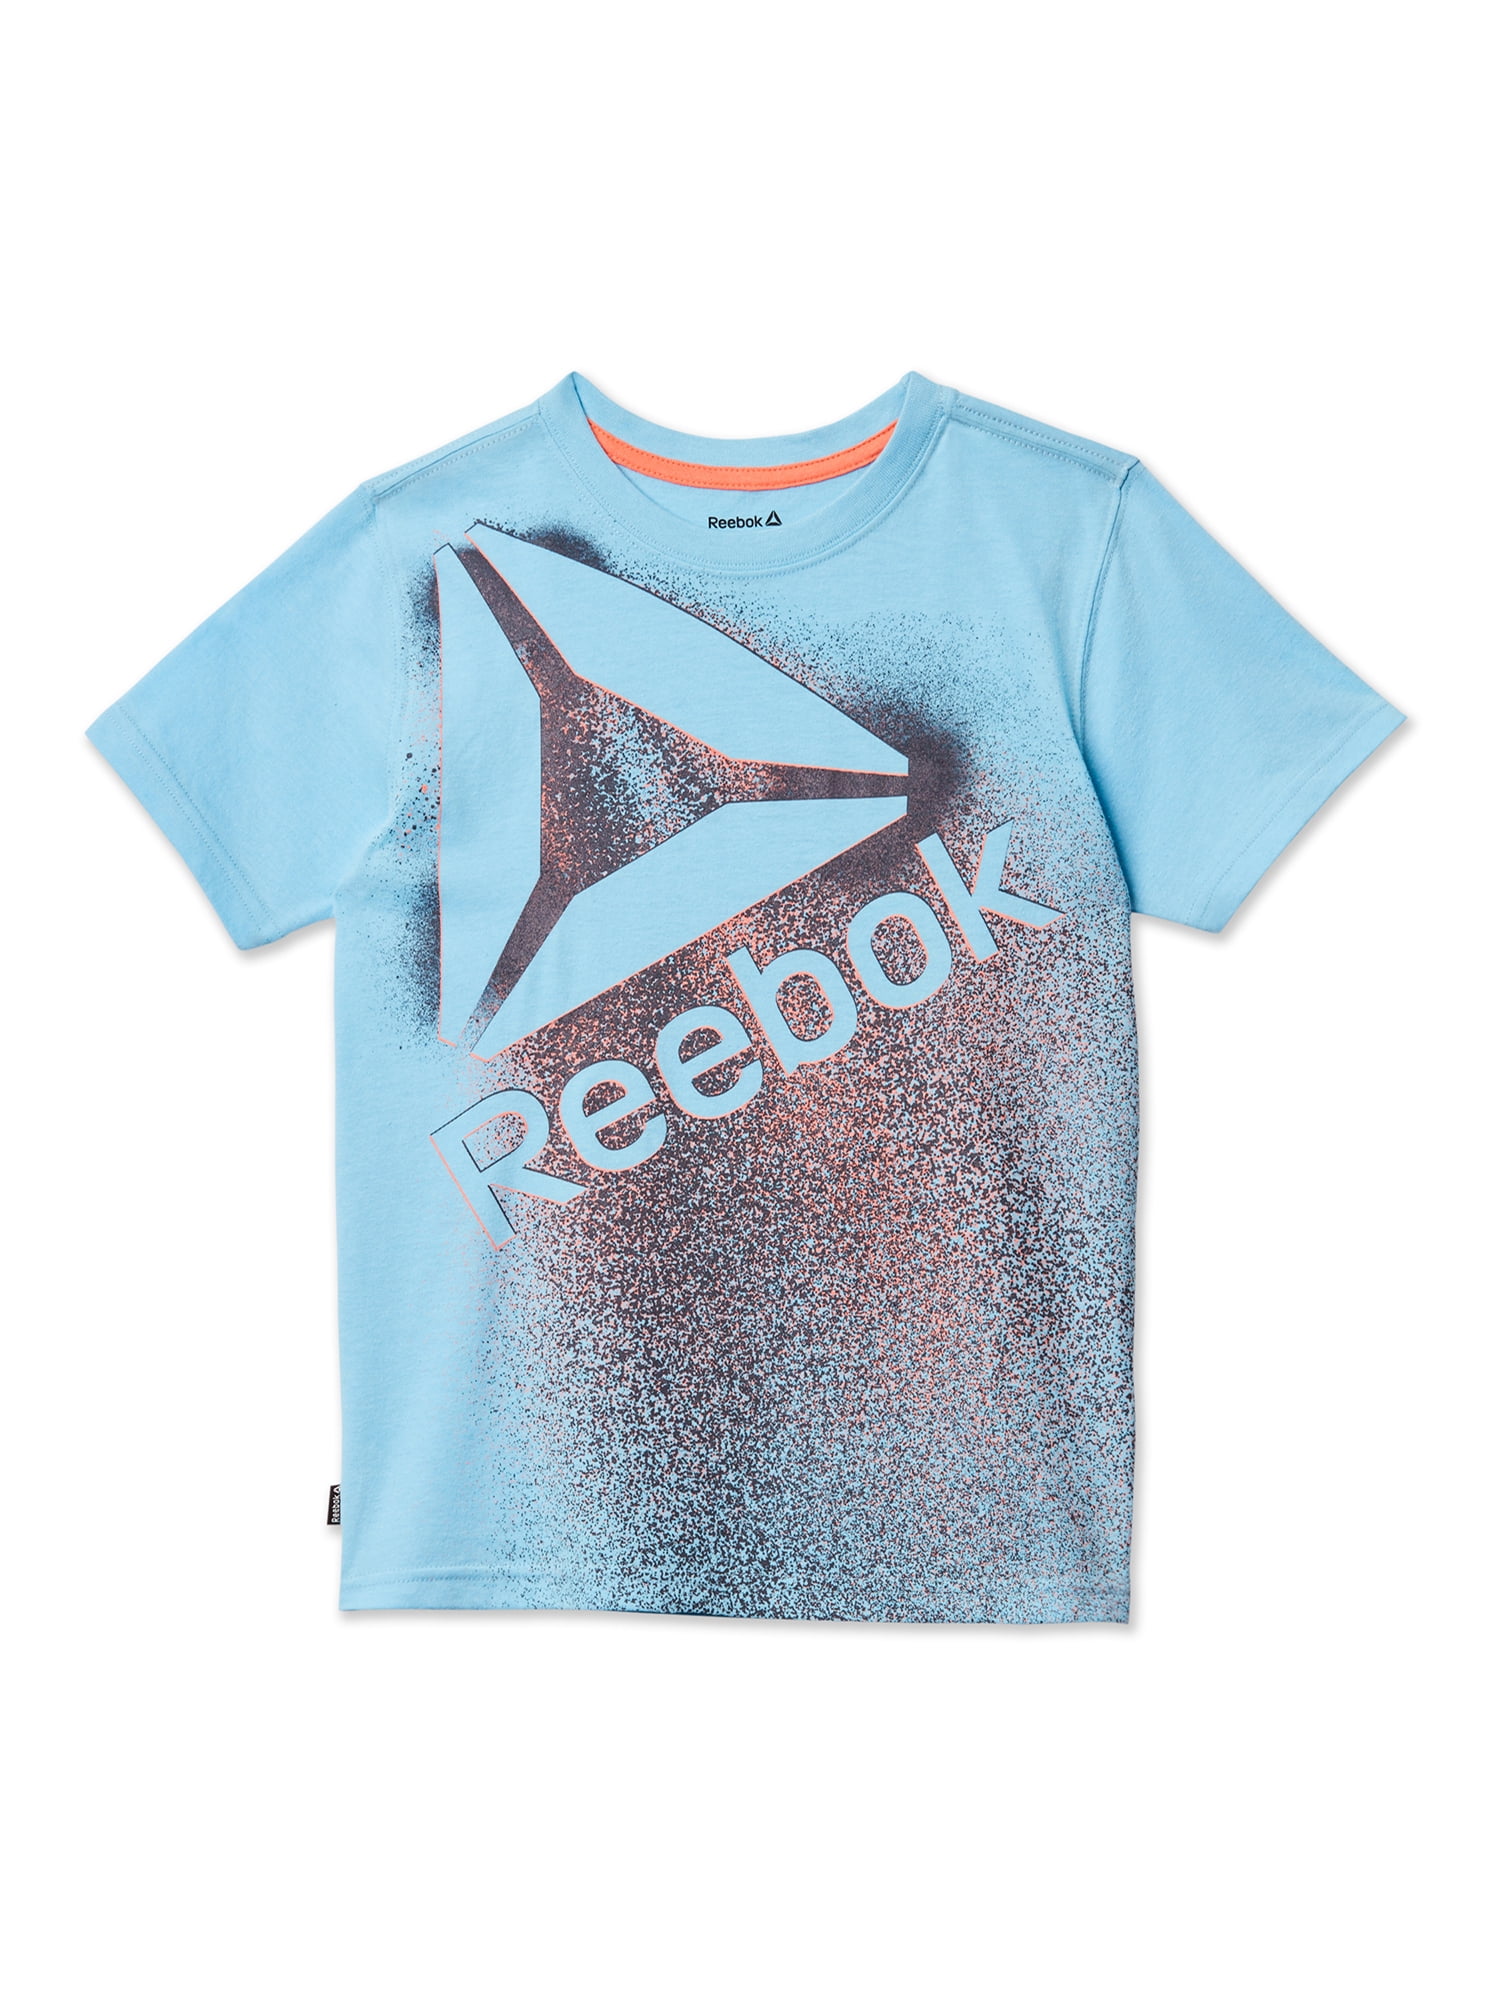 Reebok T-shirt Black 16Y discount 81% KIDS FASHION Shirts & T-shirts Sports 